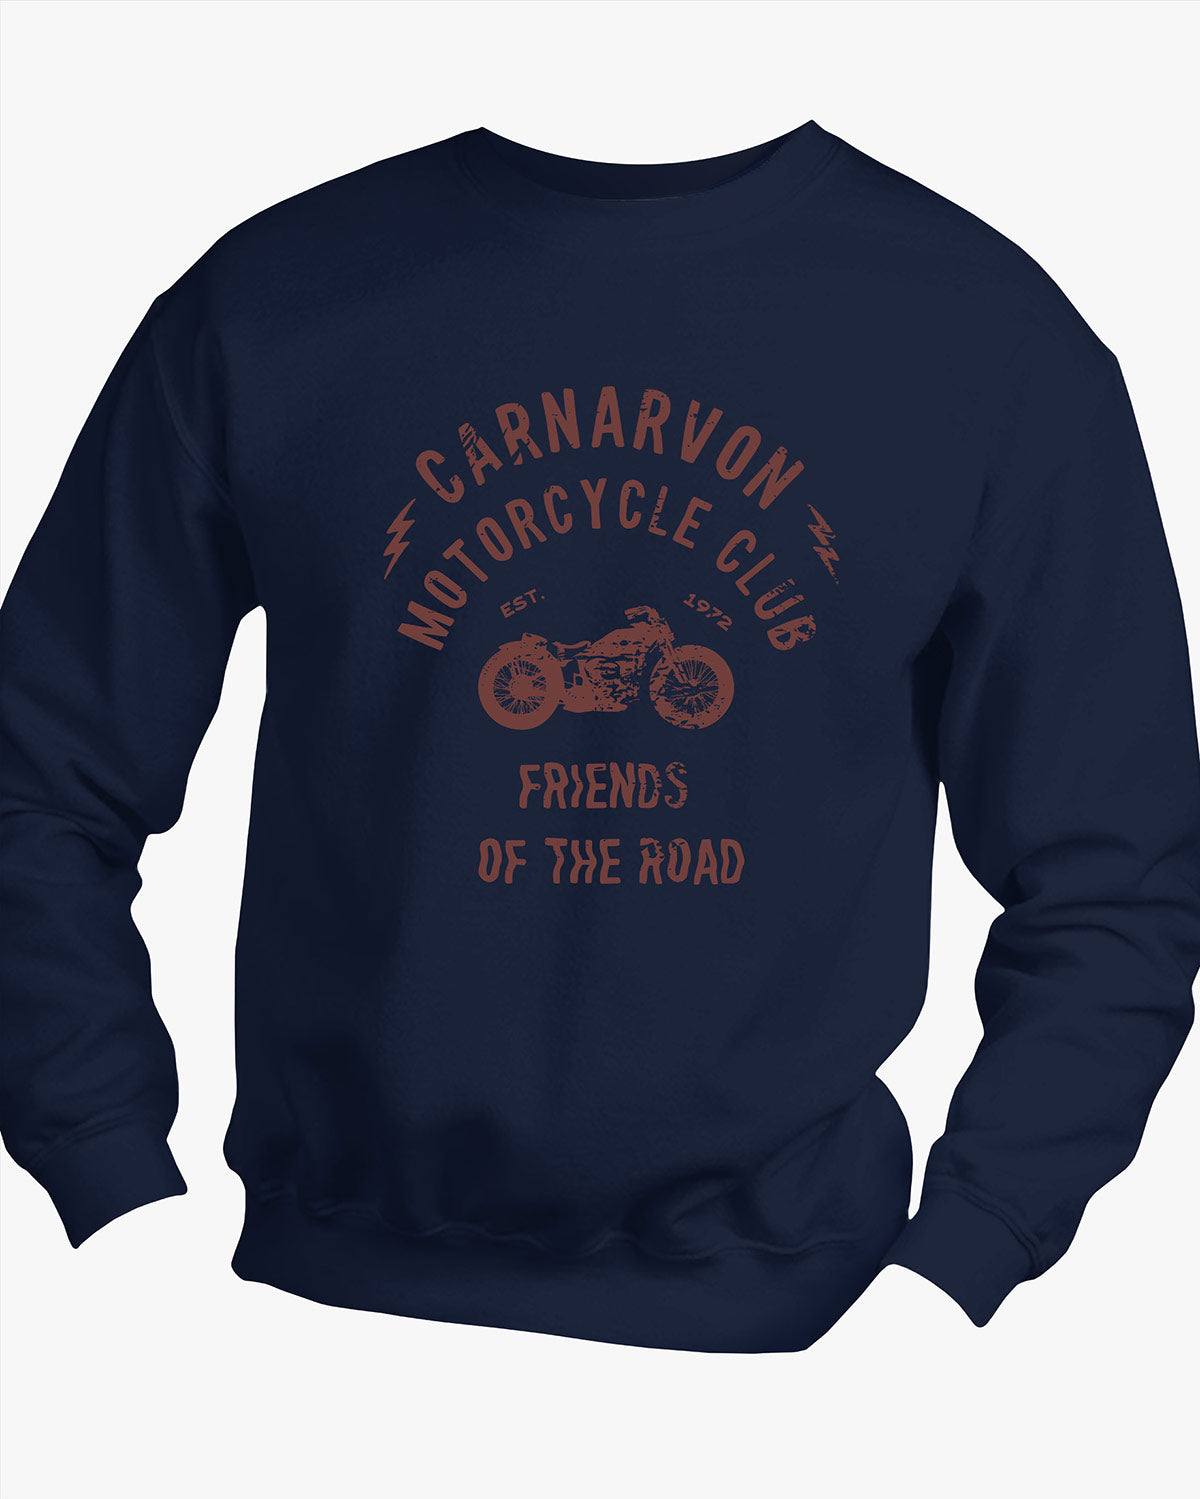 Motorcycle Club - Carnarvon - Sweater